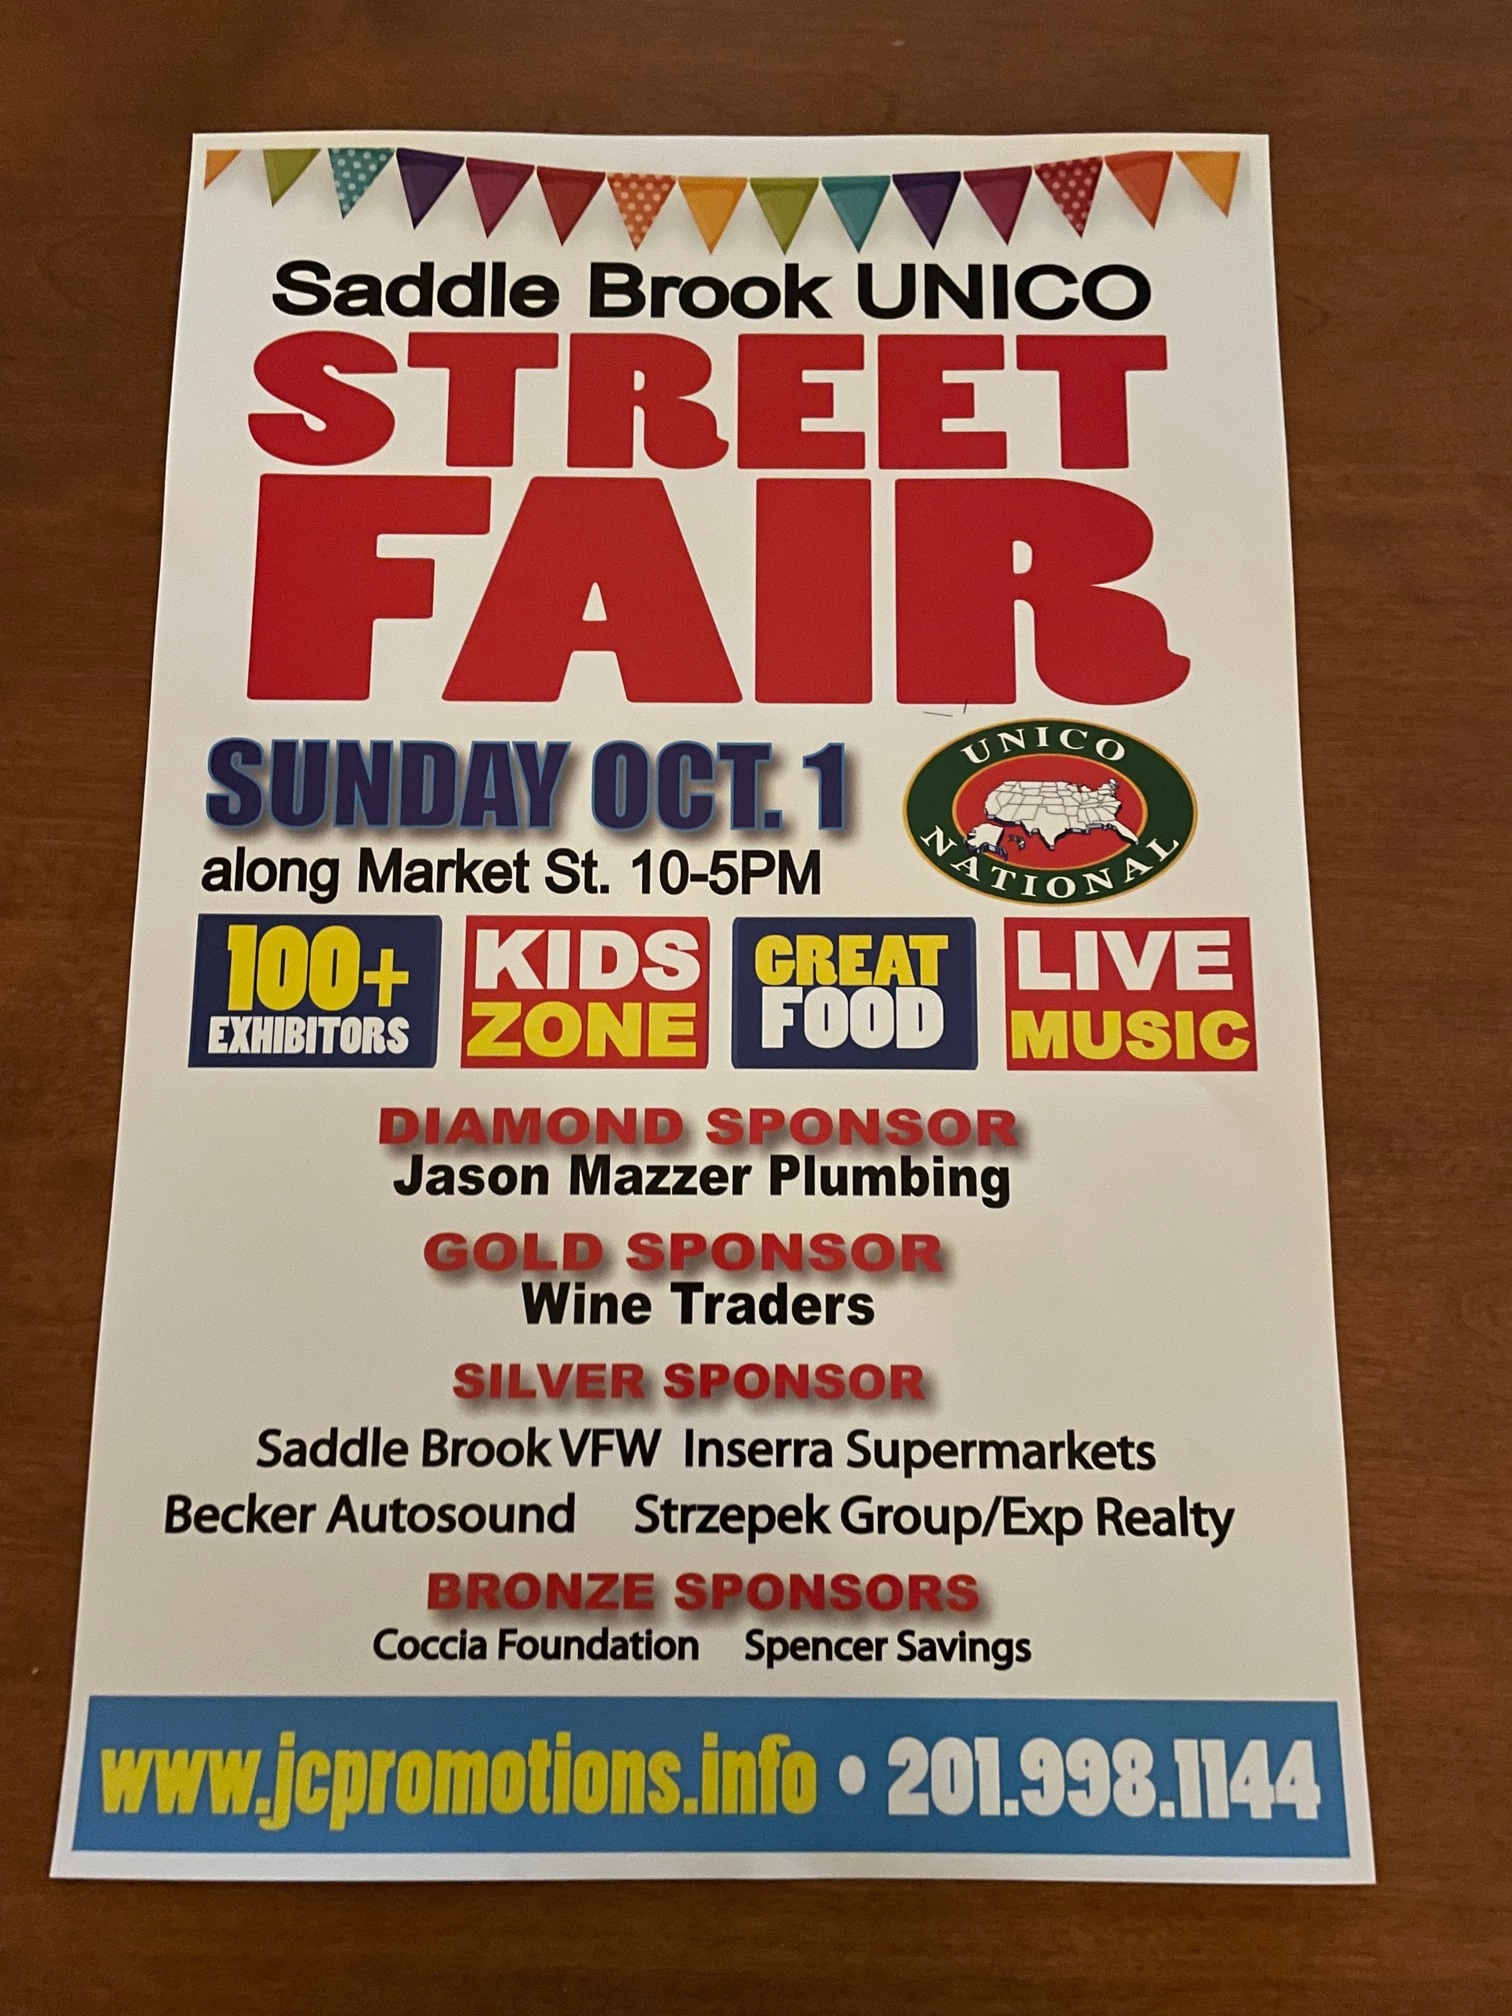 Saddle Brook UNICO Street Fair